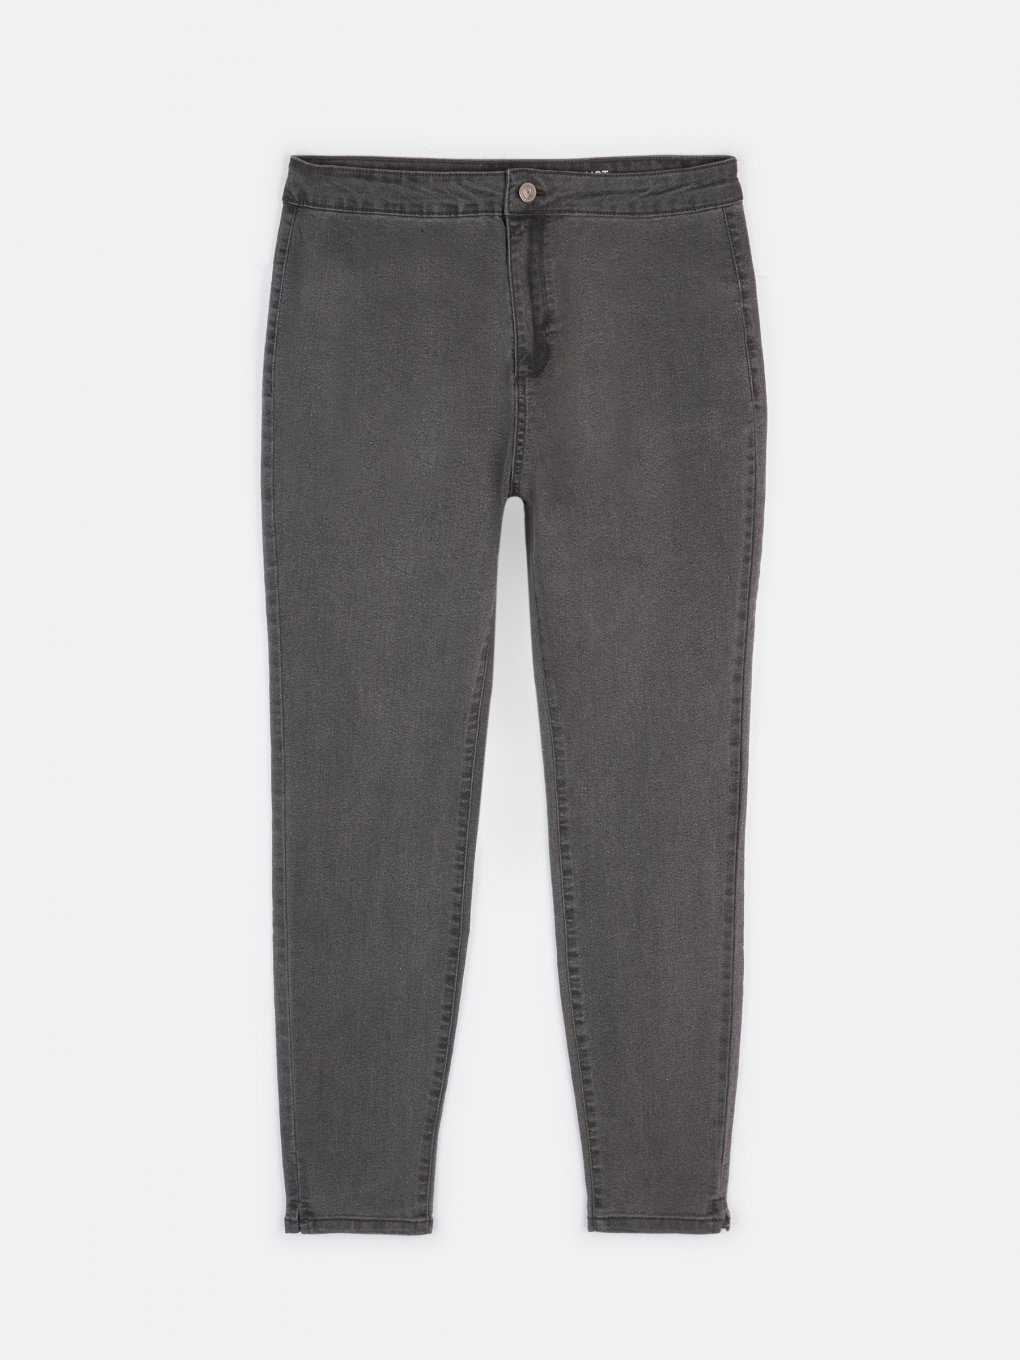 Základné dámske džínsy skinny s vysokým pásom plus size